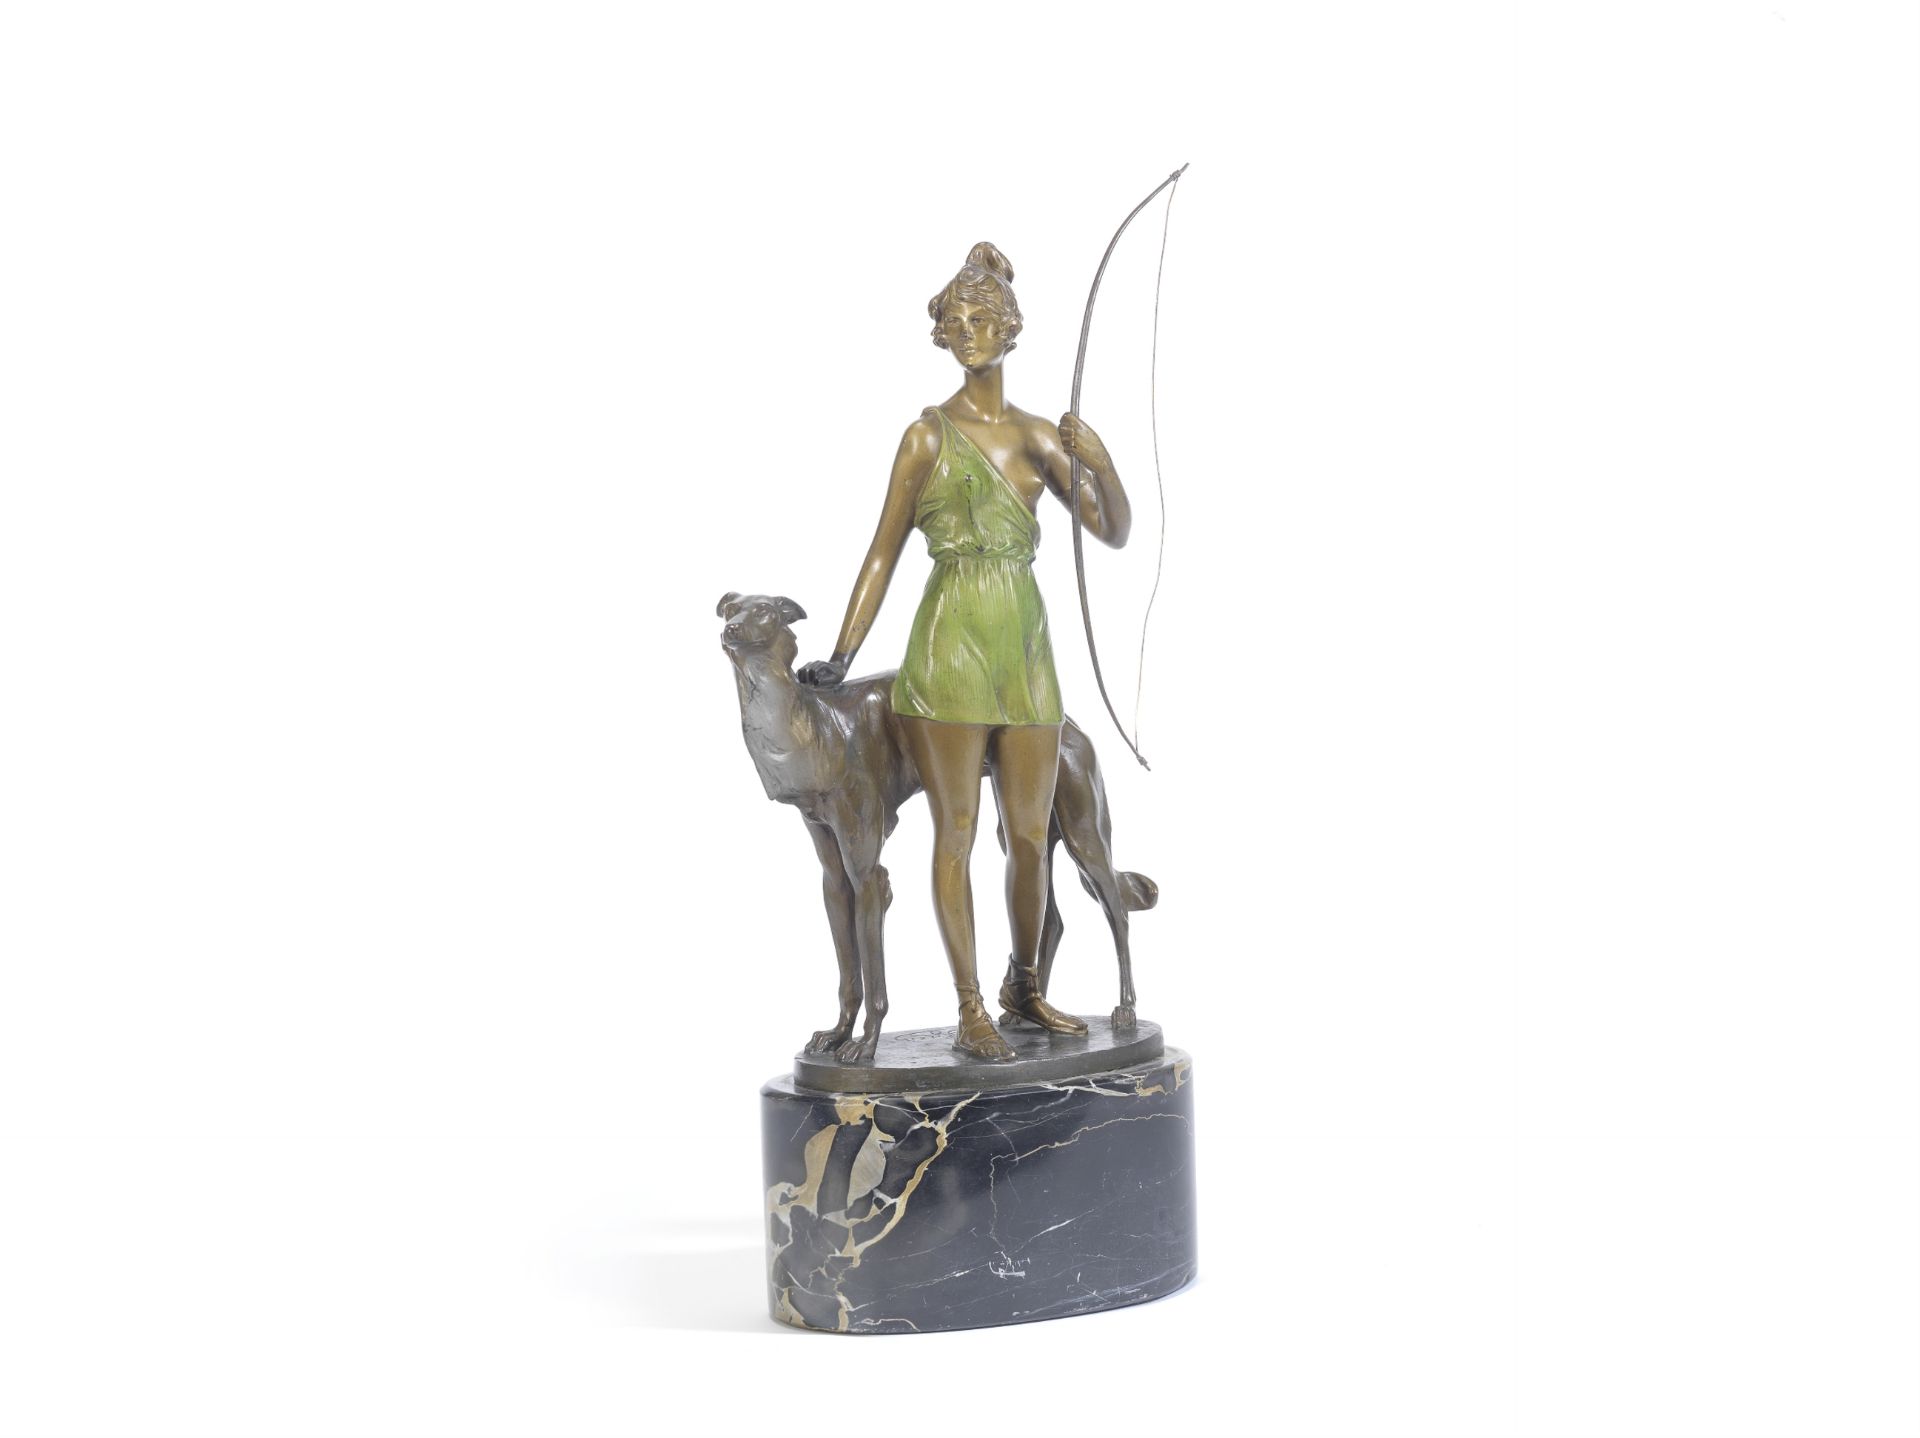 Bruno Zach (German, 1891-1935) 'Diana the Huntress': An Art Deco Bronze Sculpture, circa 1925